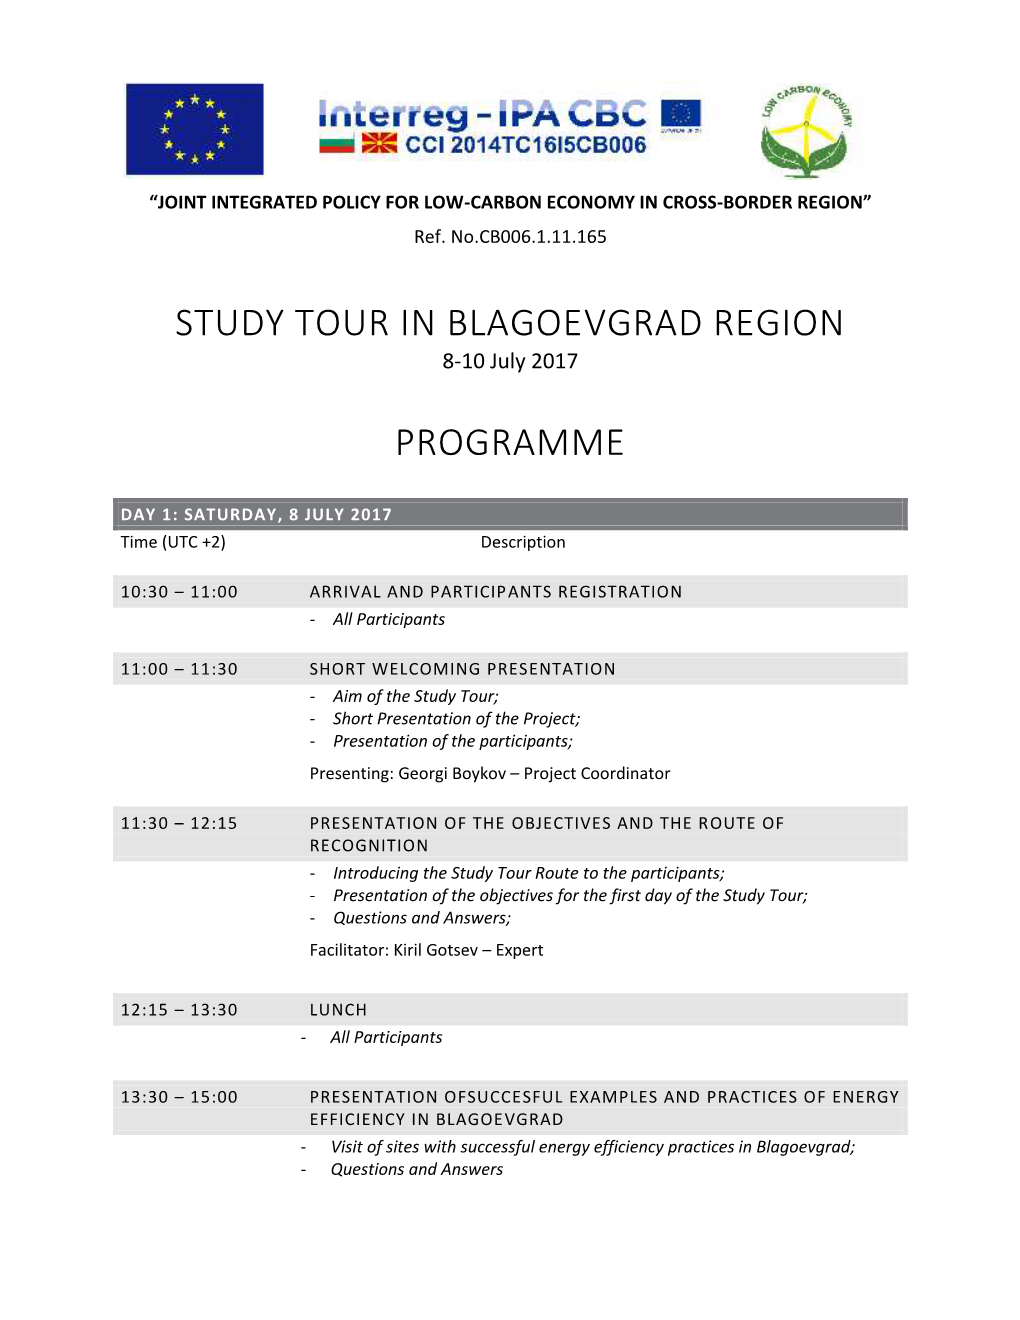 Study Tour in Blagoevgrad Region Programme